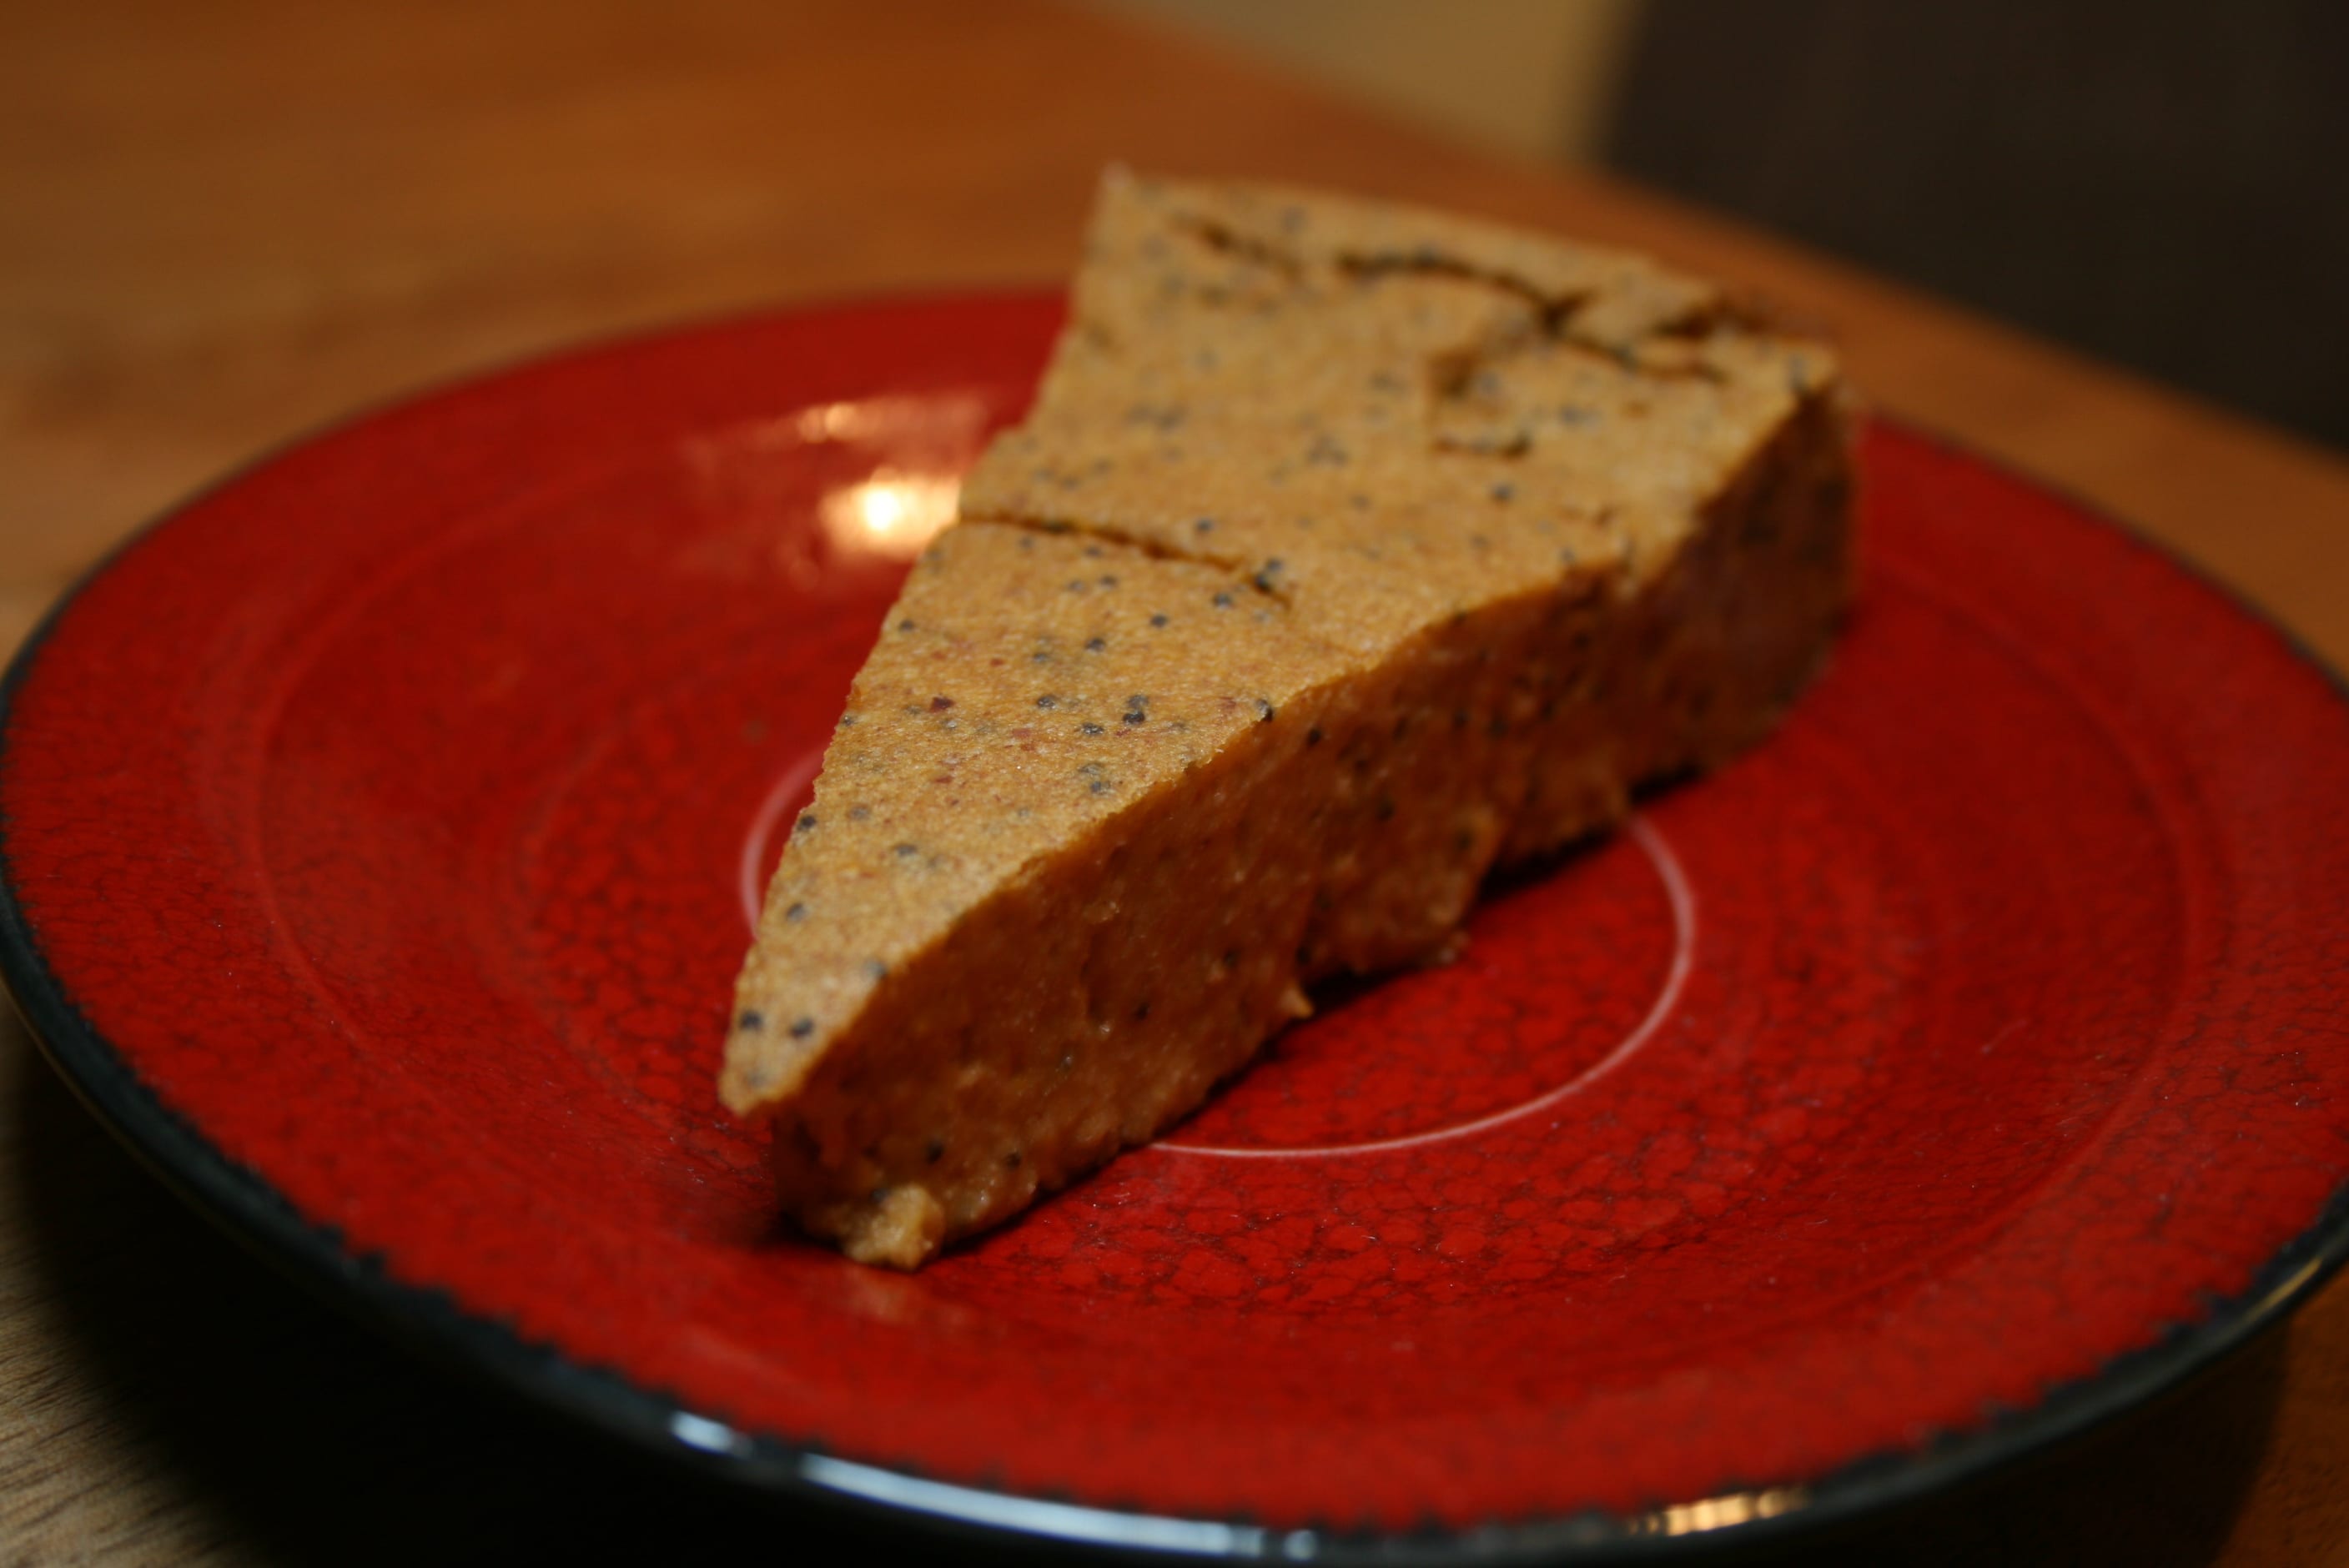 Oat flour buckwheat flour poppy seeds cinnamon ginger sugar-free vegan pumpkin pie